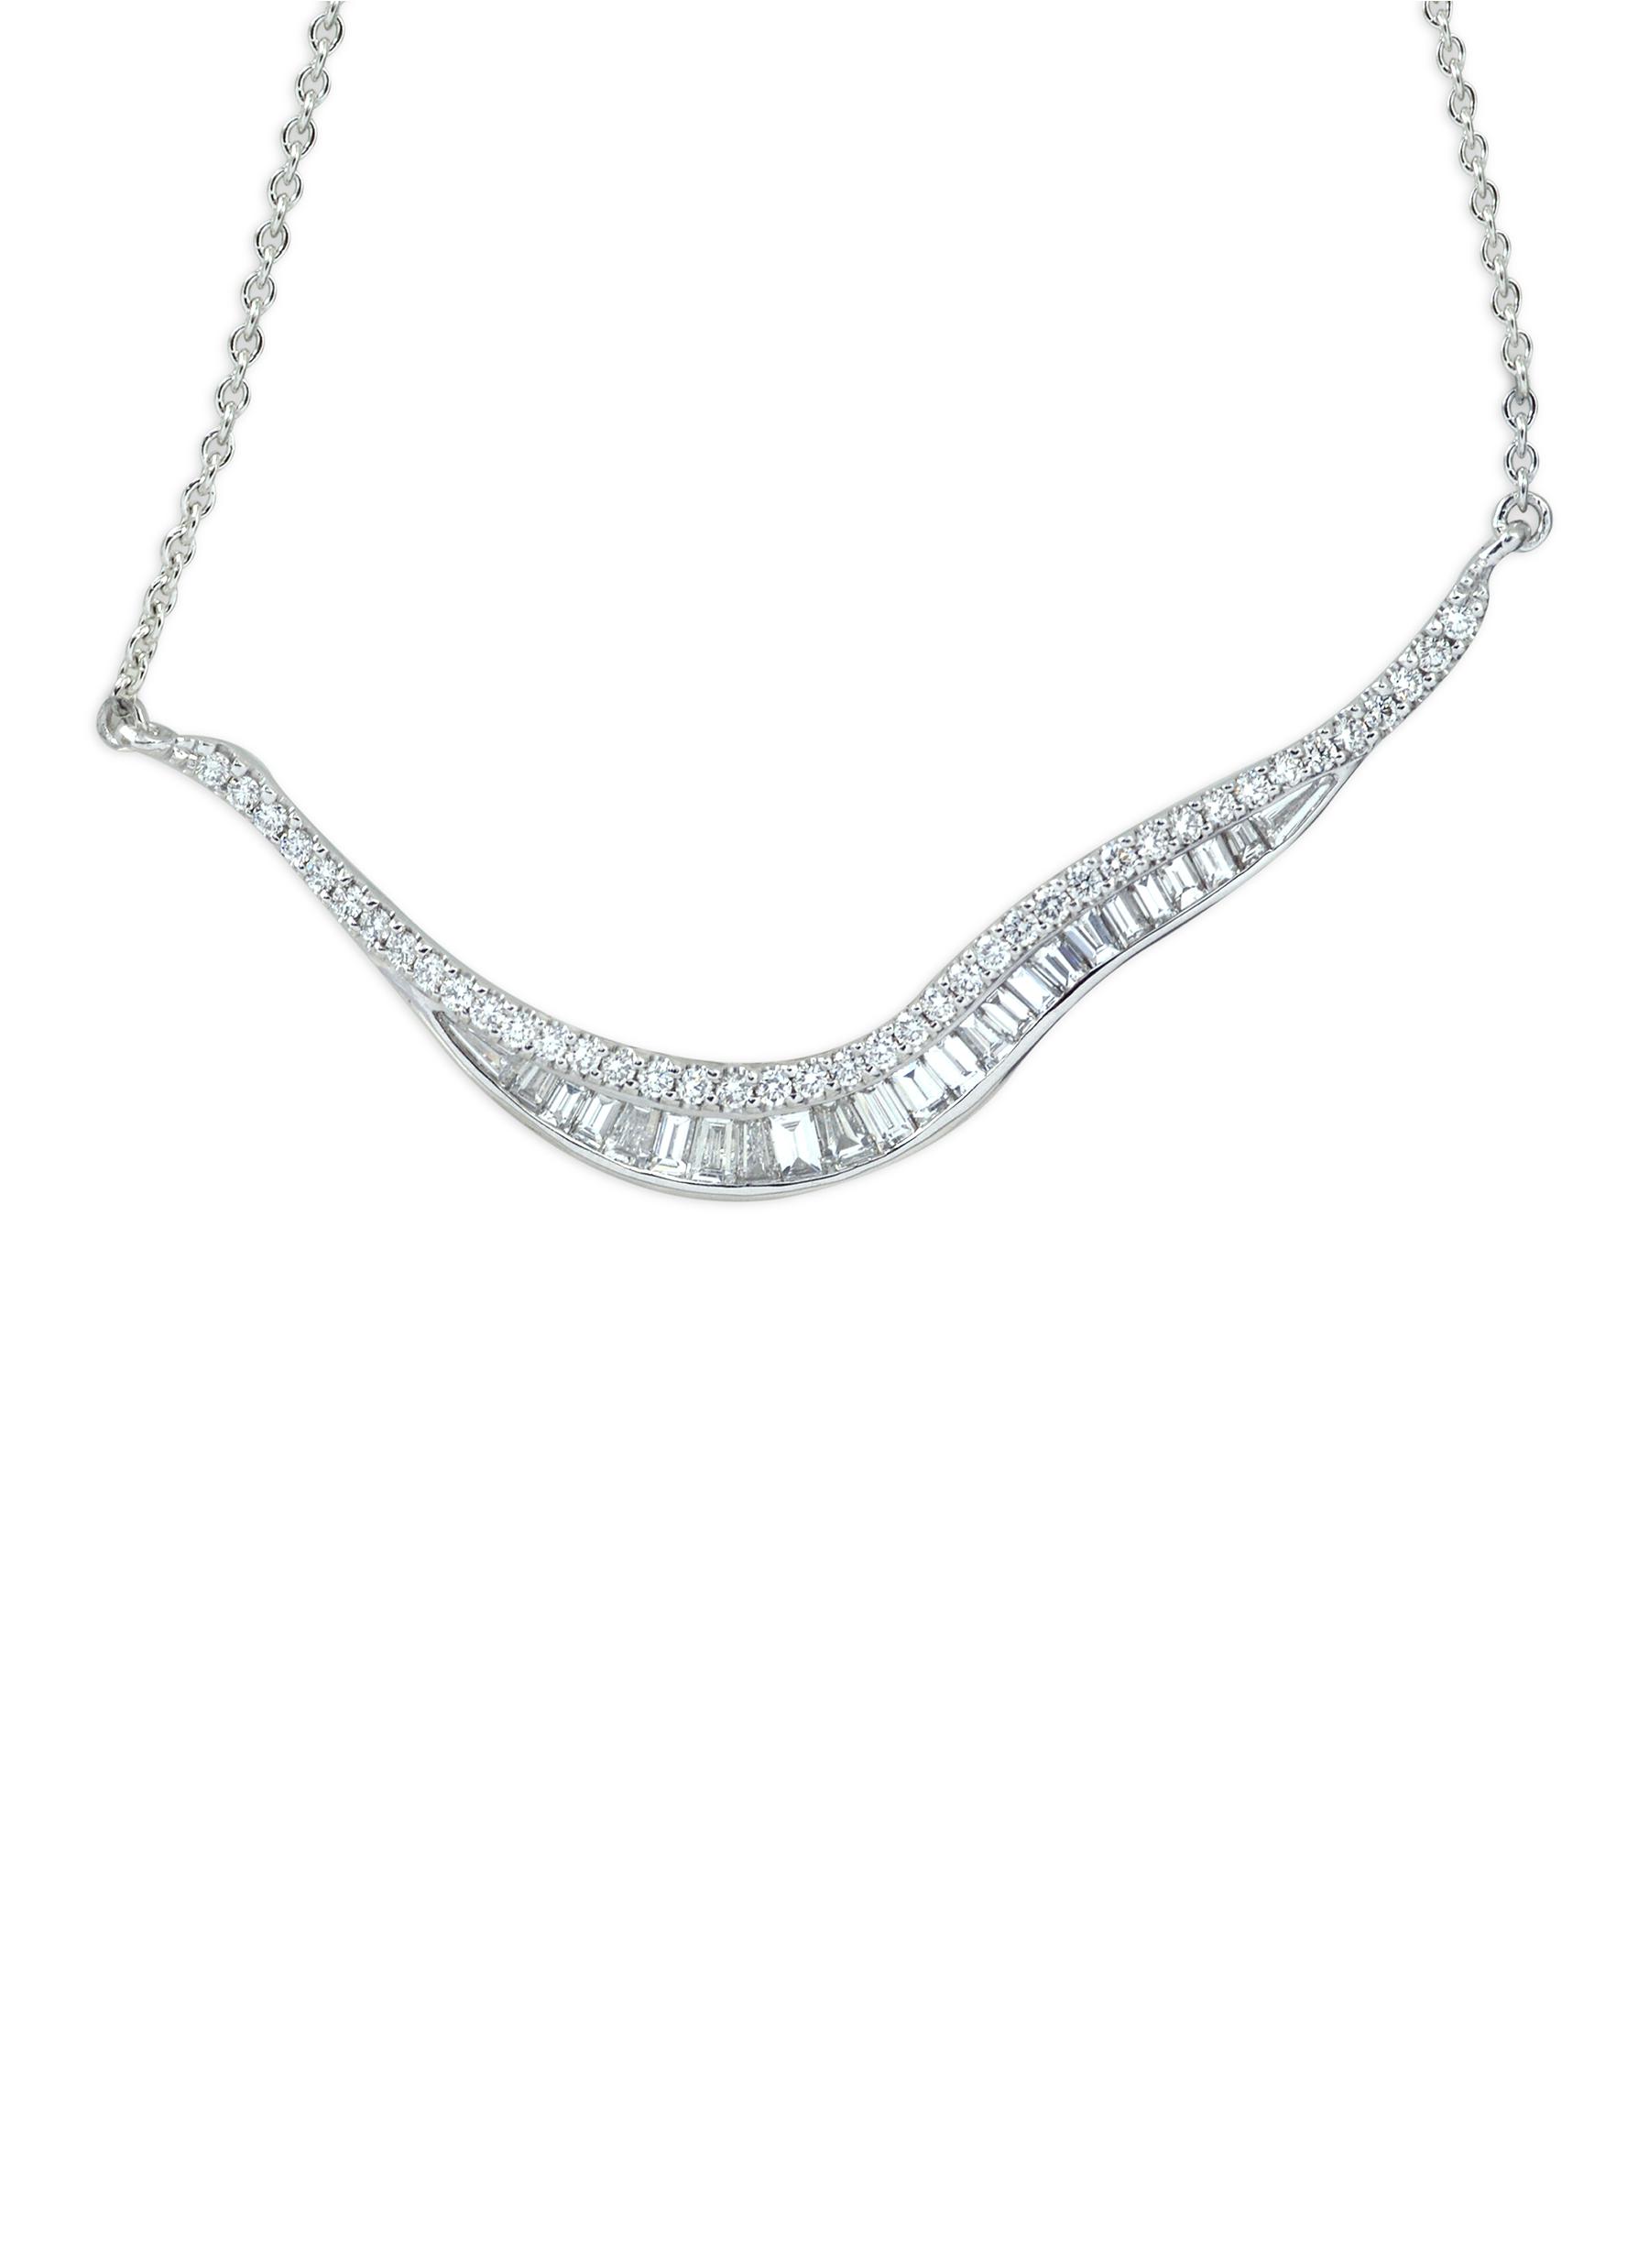 KAVANT & SHARART ‘Talay' Diamond 18K White Gold Necklace